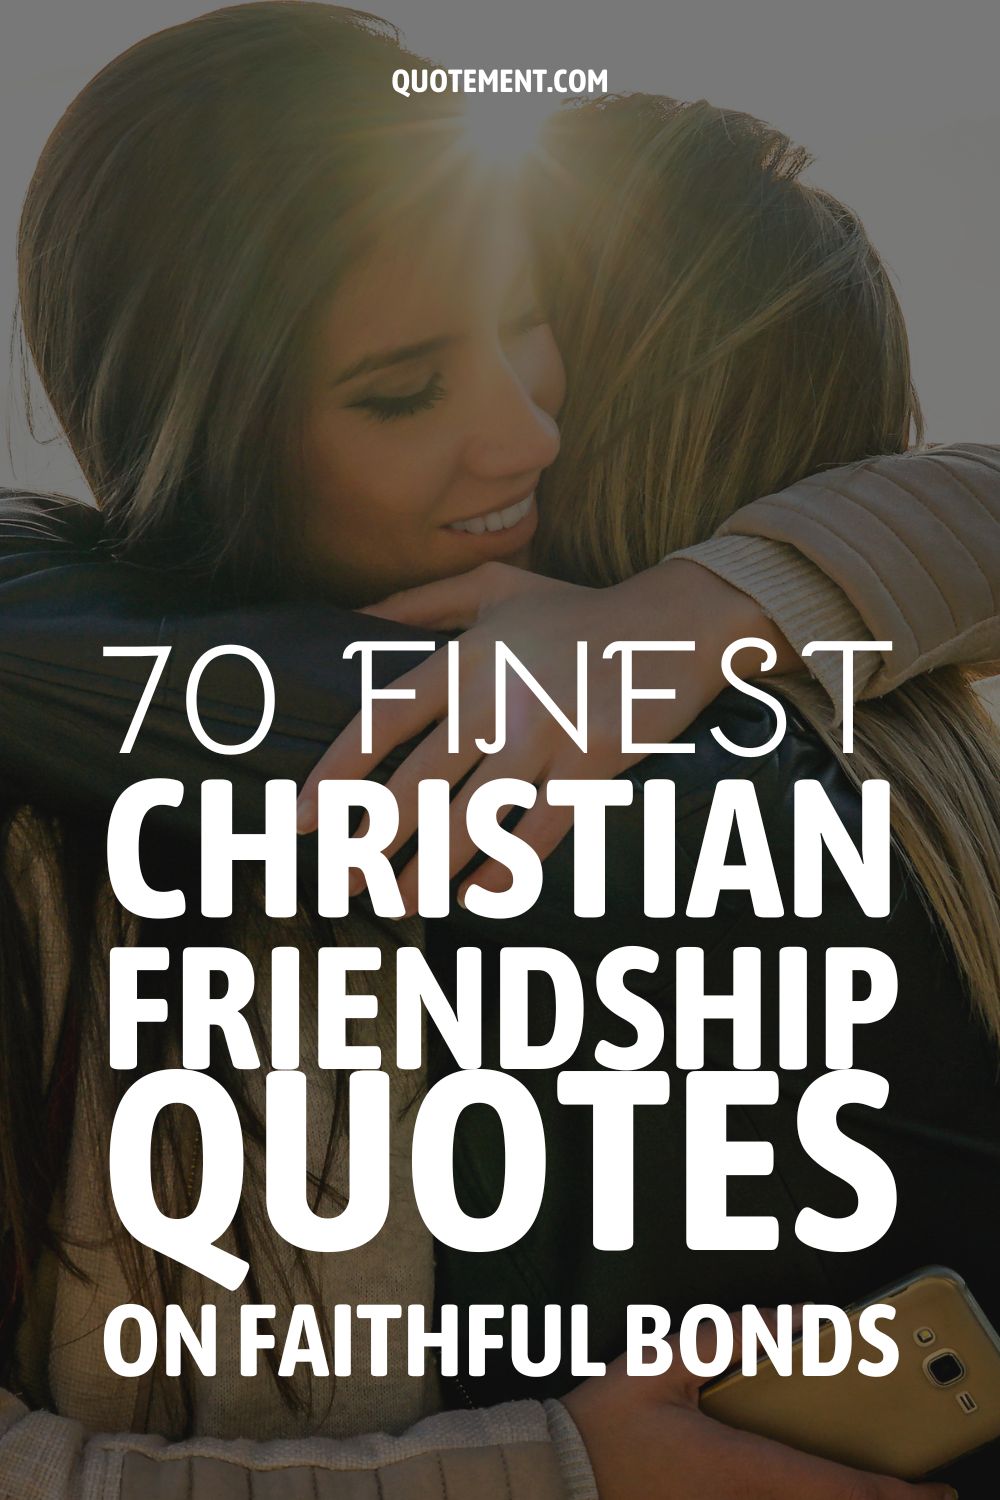 70 mejores frases de amistad cristiana sobre lazos fieles